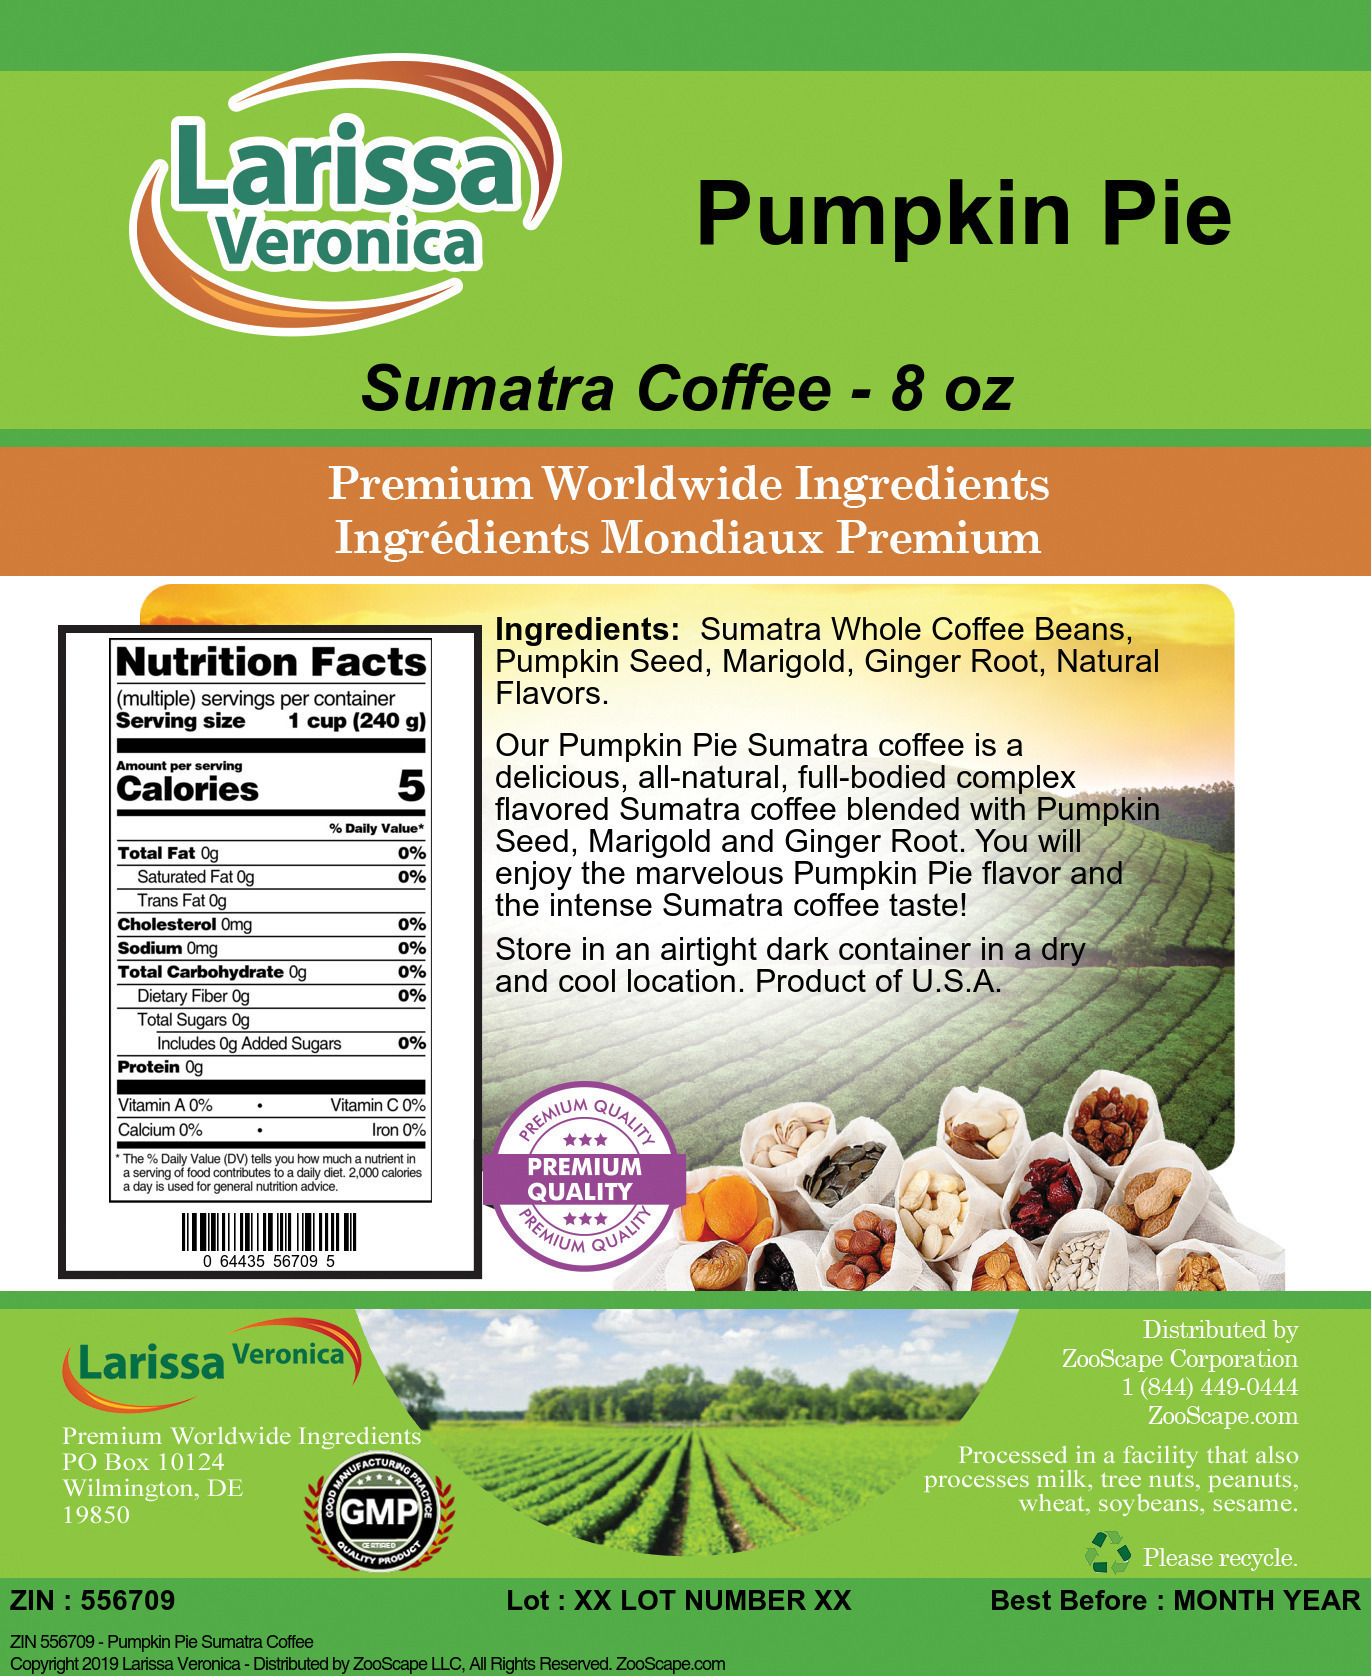 Pumpkin Pie Sumatra Coffee - Label